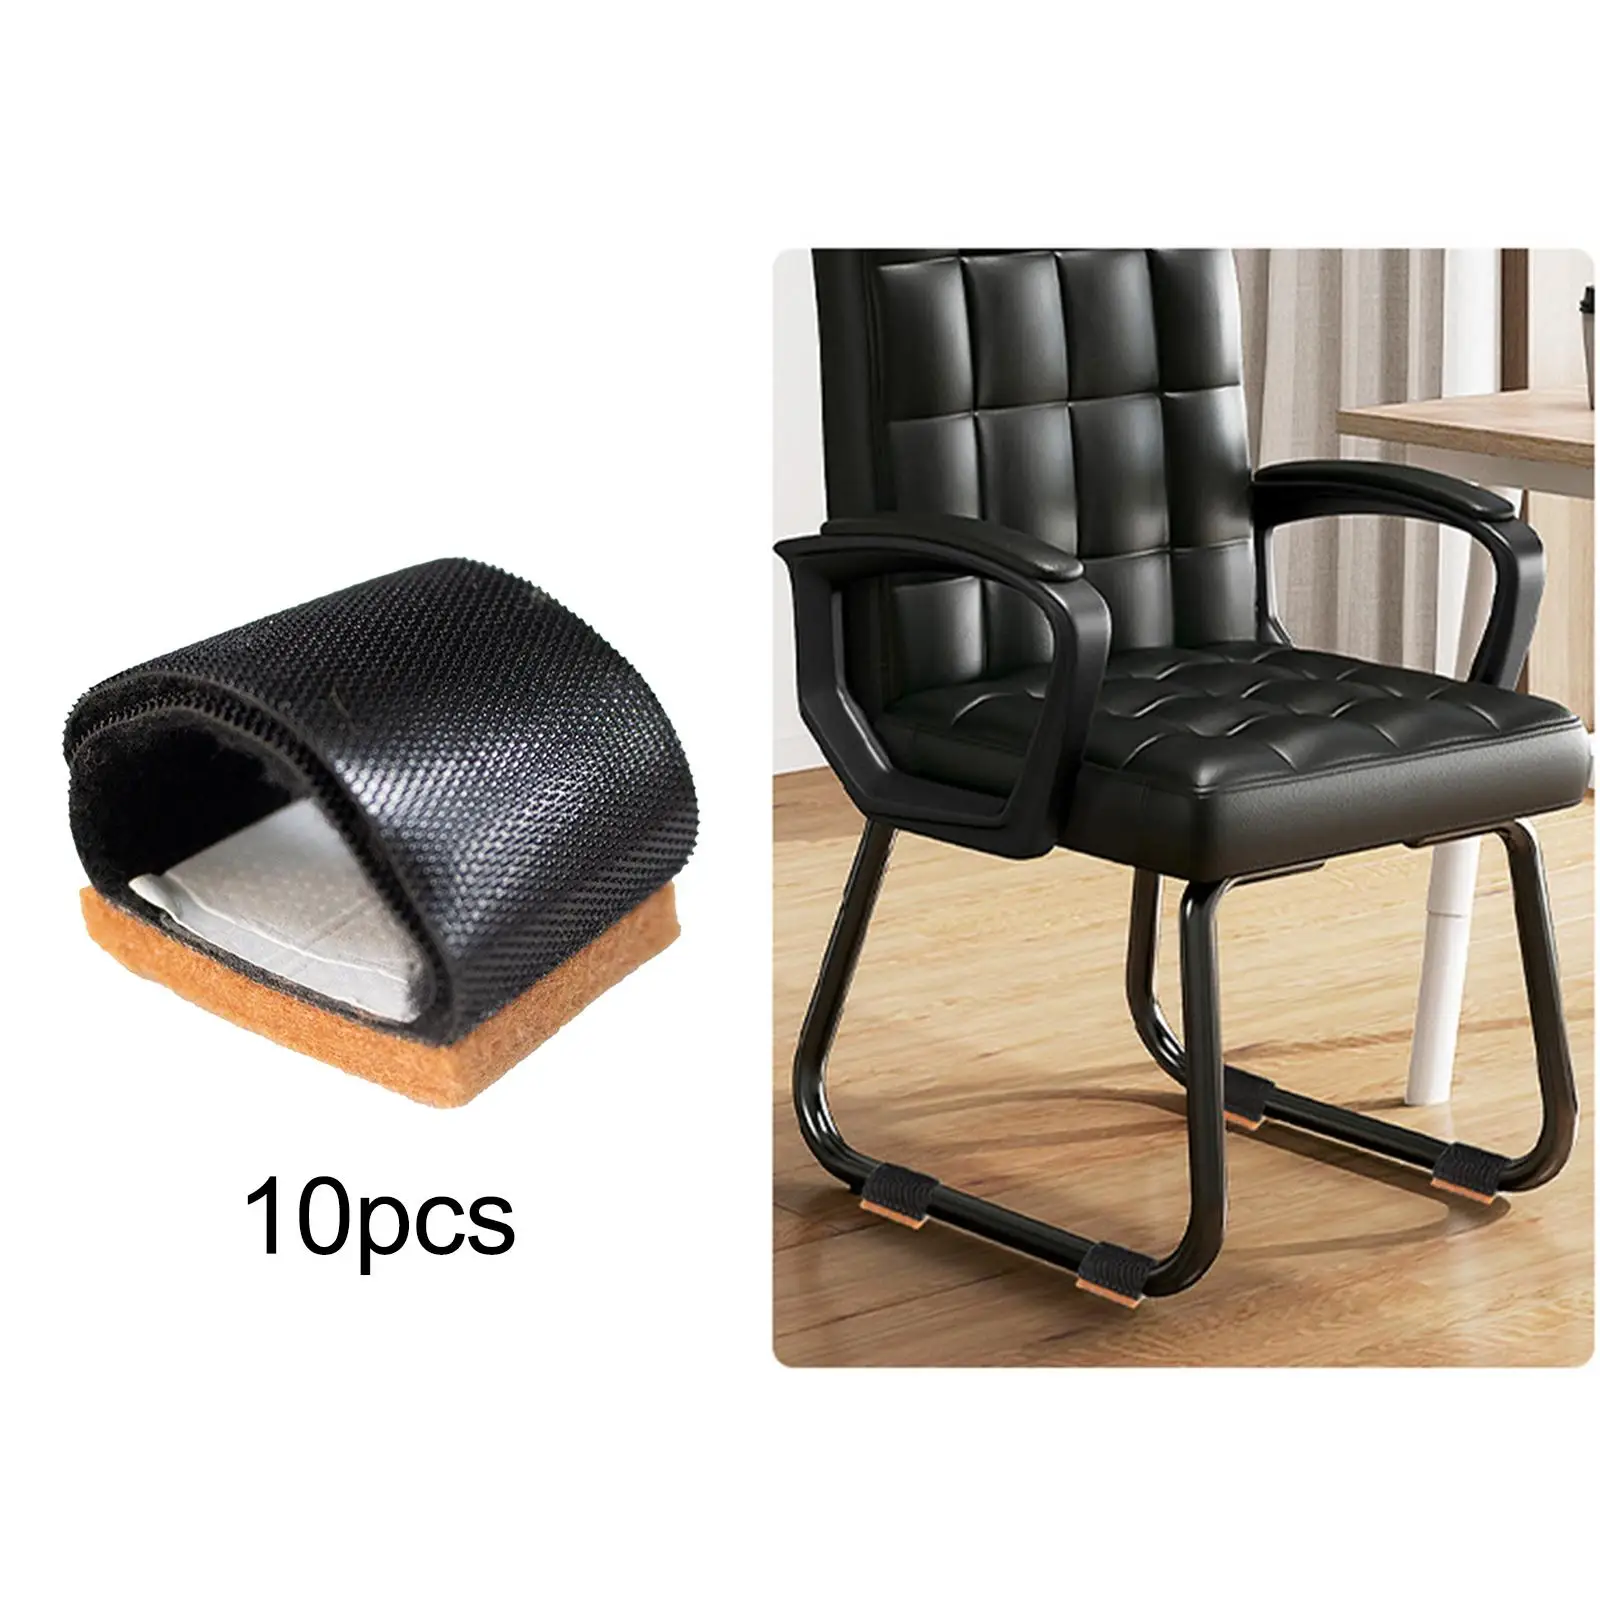 10Pcs Furniture Leg Pad Non Slip Chair Leg Protect for Patio Office Shop